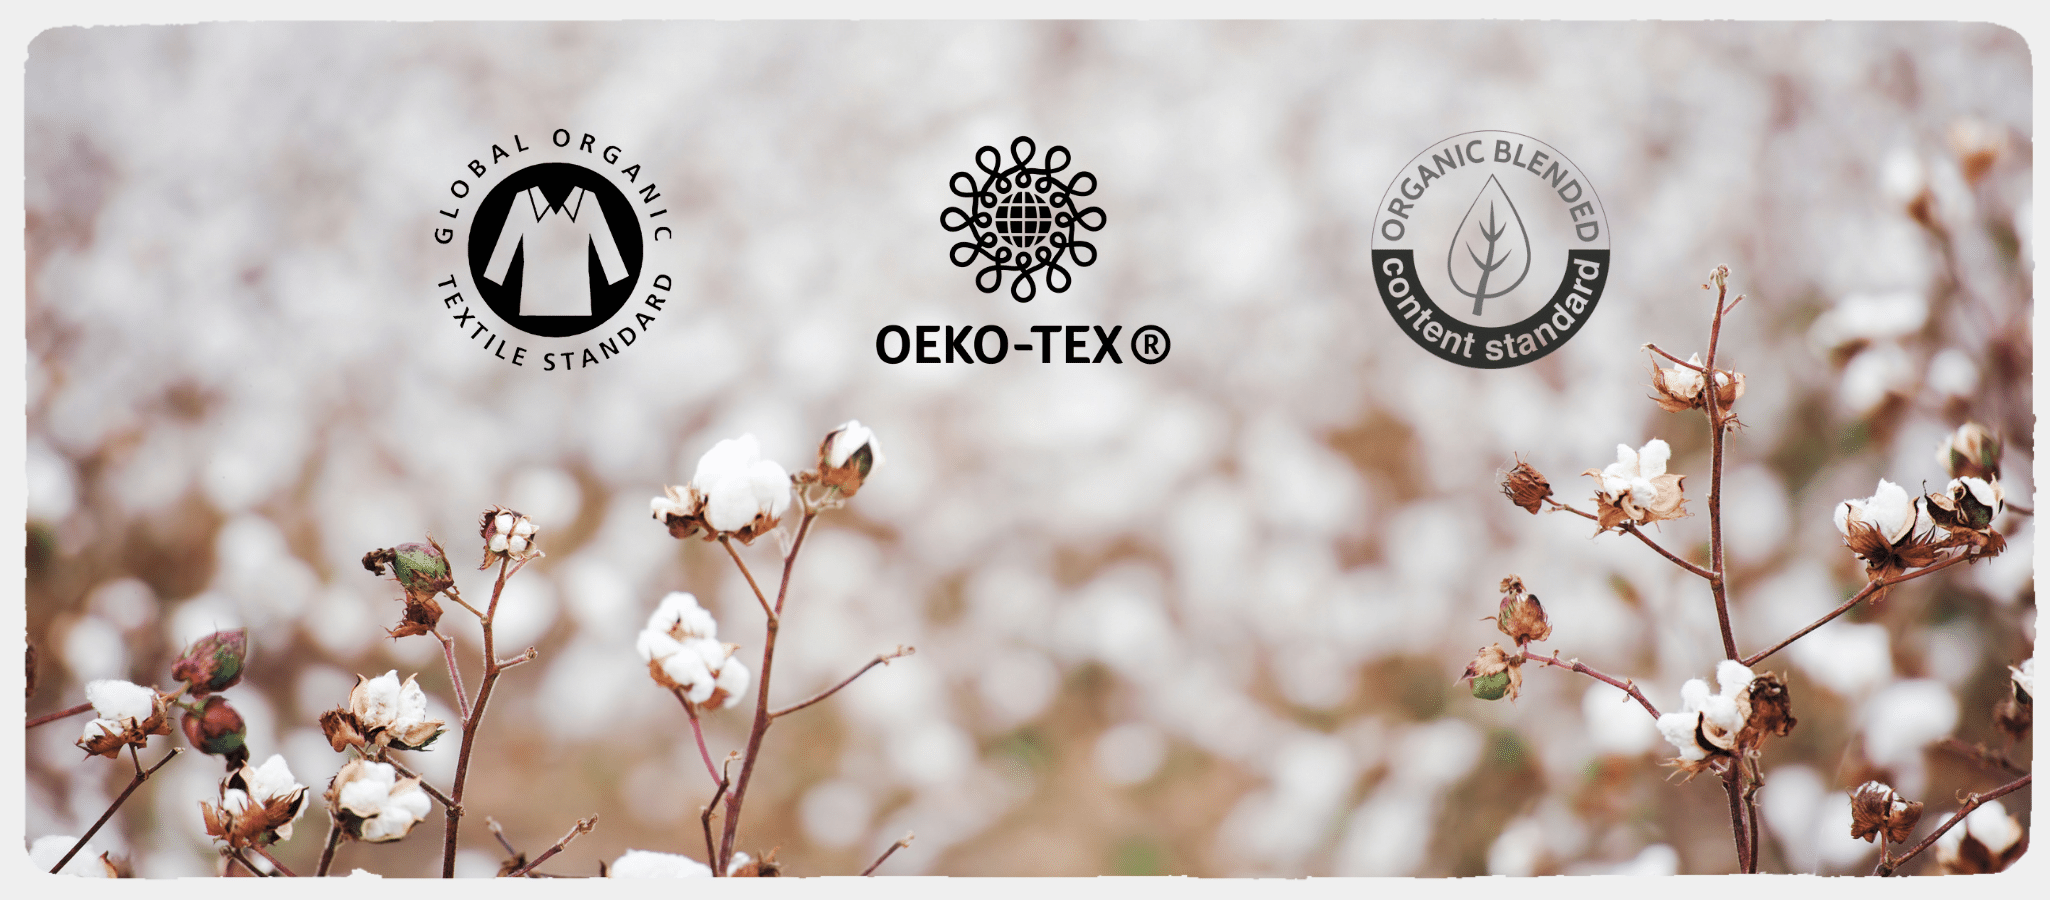 OEKO-TEX global organic textile sstandard